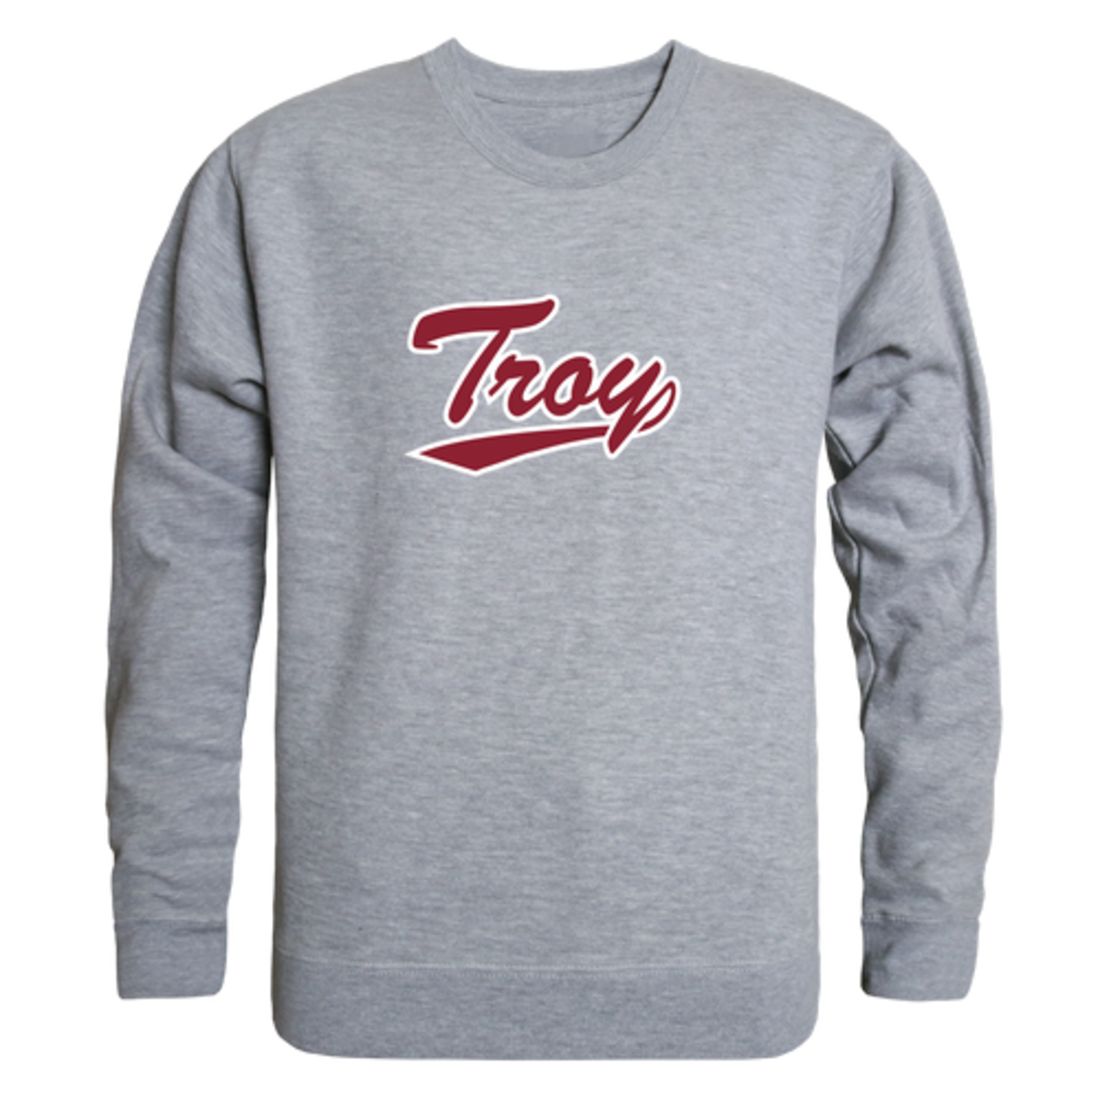 Troy University Trojans Script Crewneck Pullover Sweatshirt Sweater Black-Campus-Wardrobe